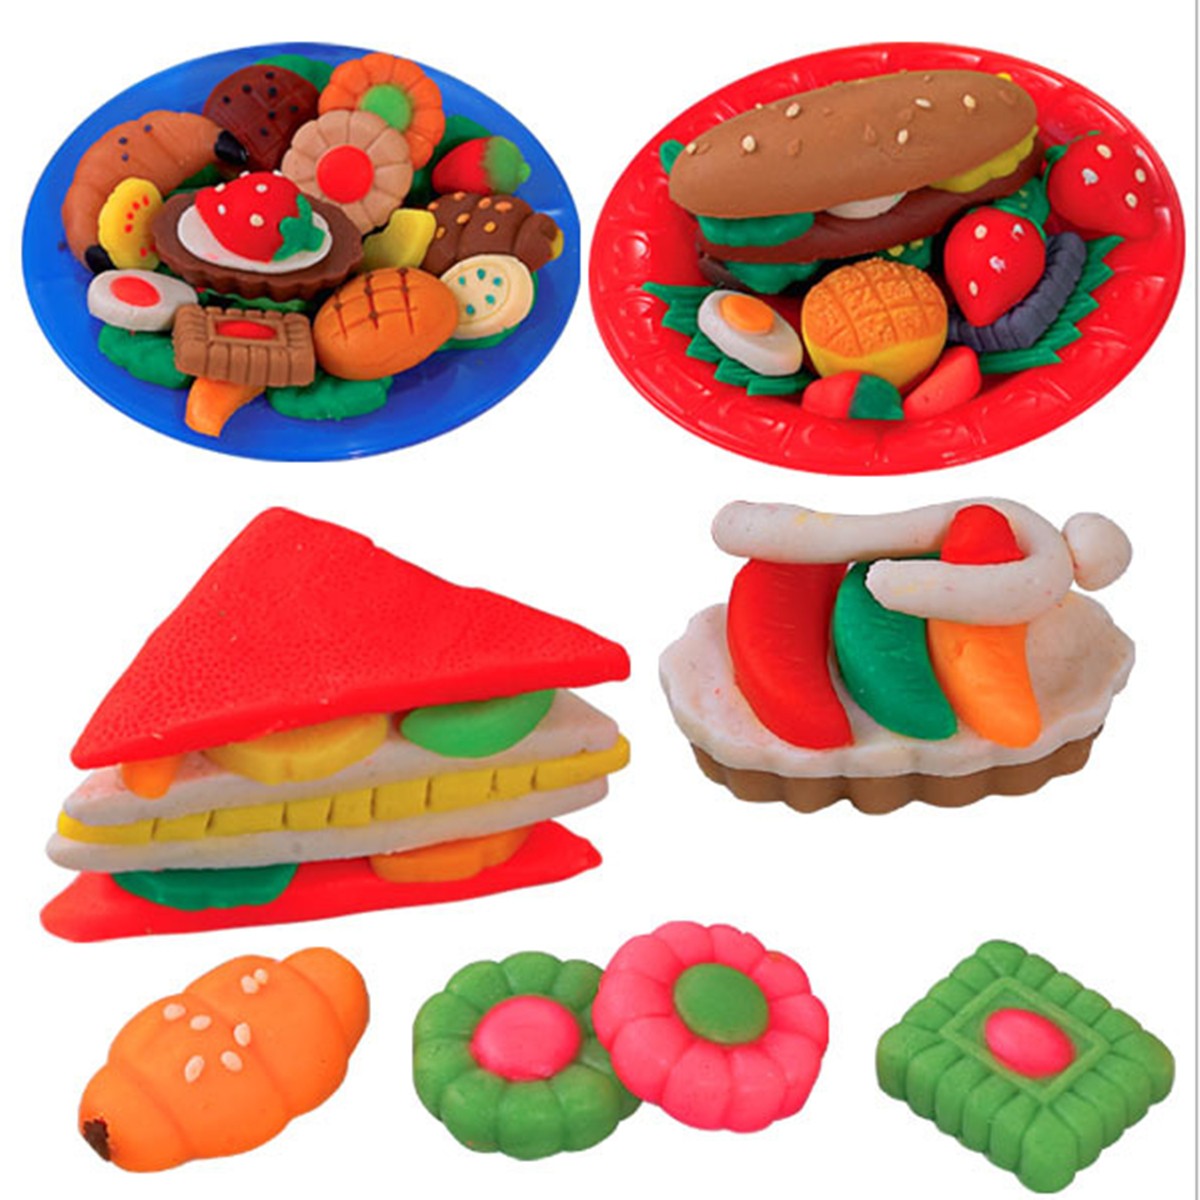 Предметы из пластилина. Еда из пластилина. Лепка сладости. Игрушки из пластилина для детей. Еда из пластилина для детей.